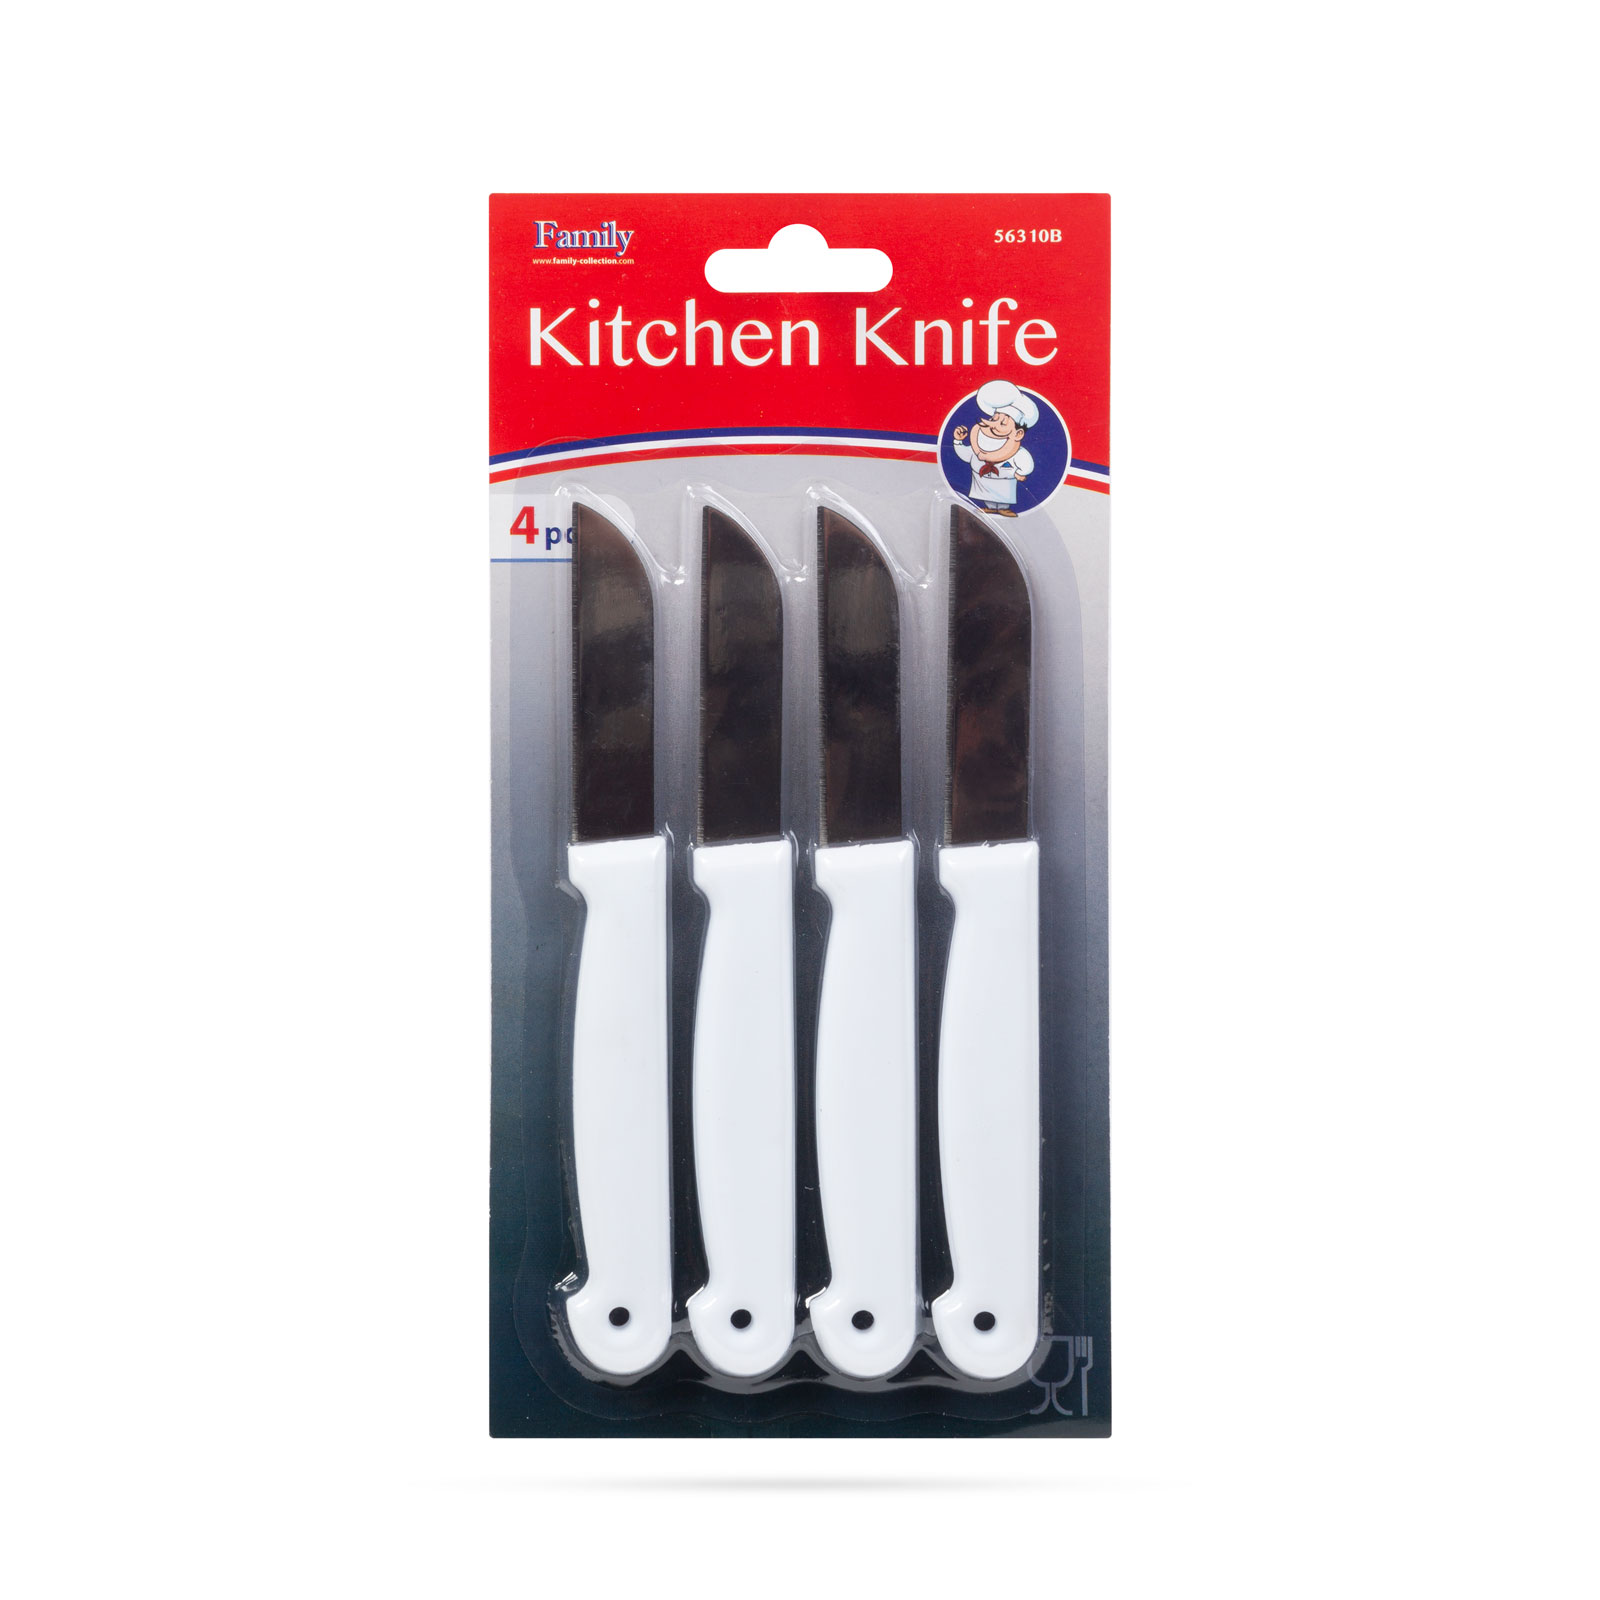 Kitchen knife - white - 4 pcs thumb